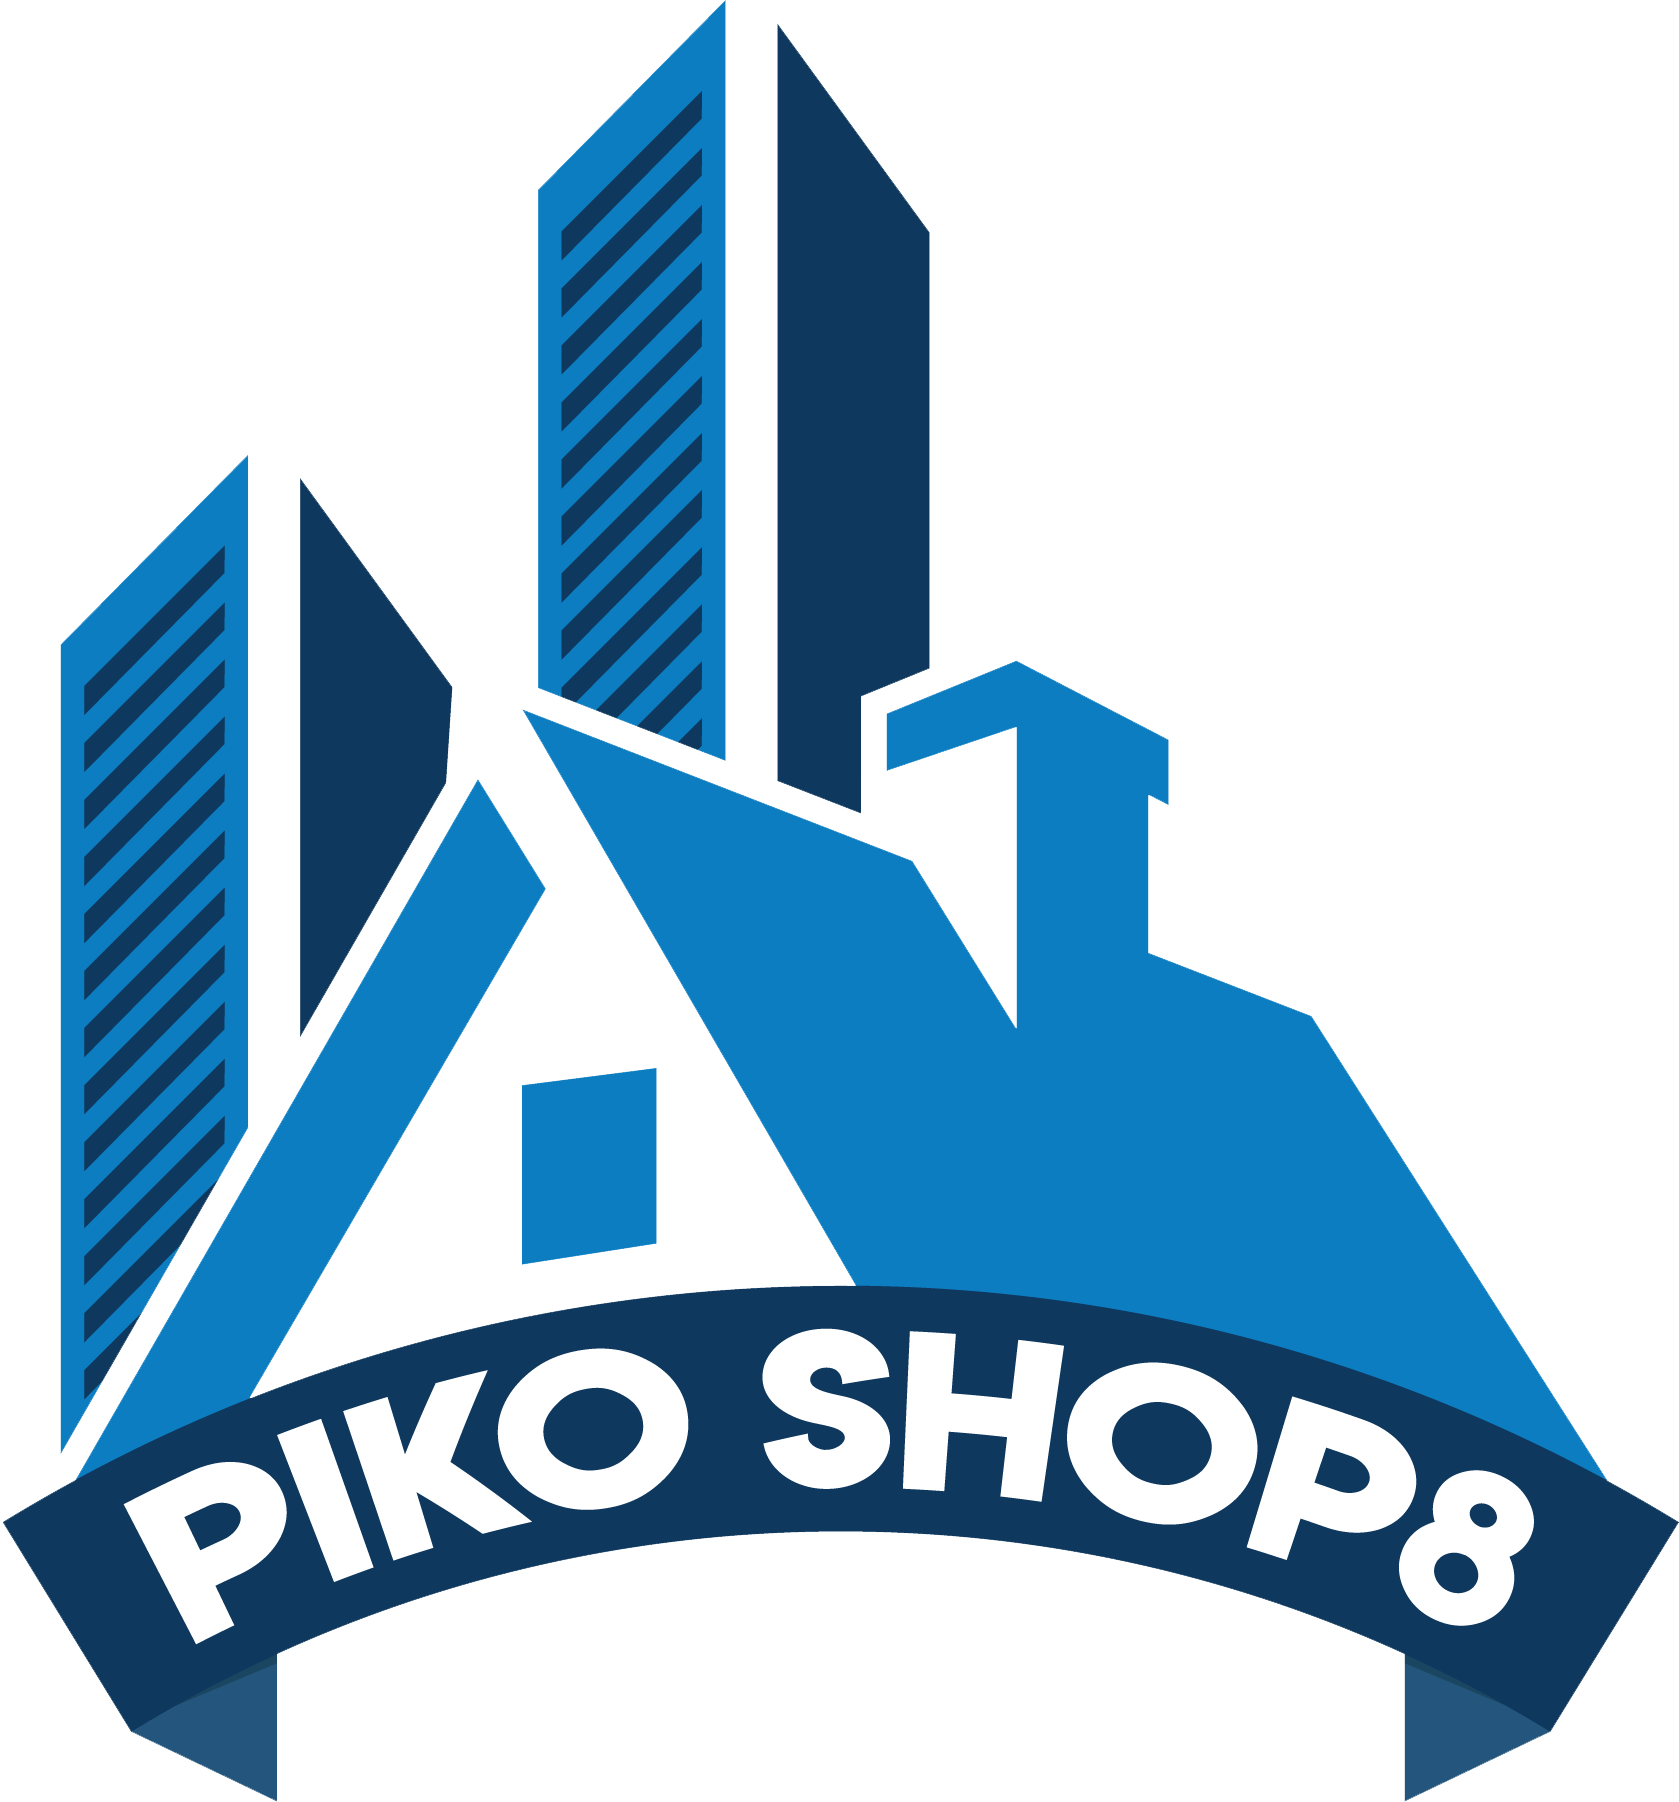 Pikoshop8